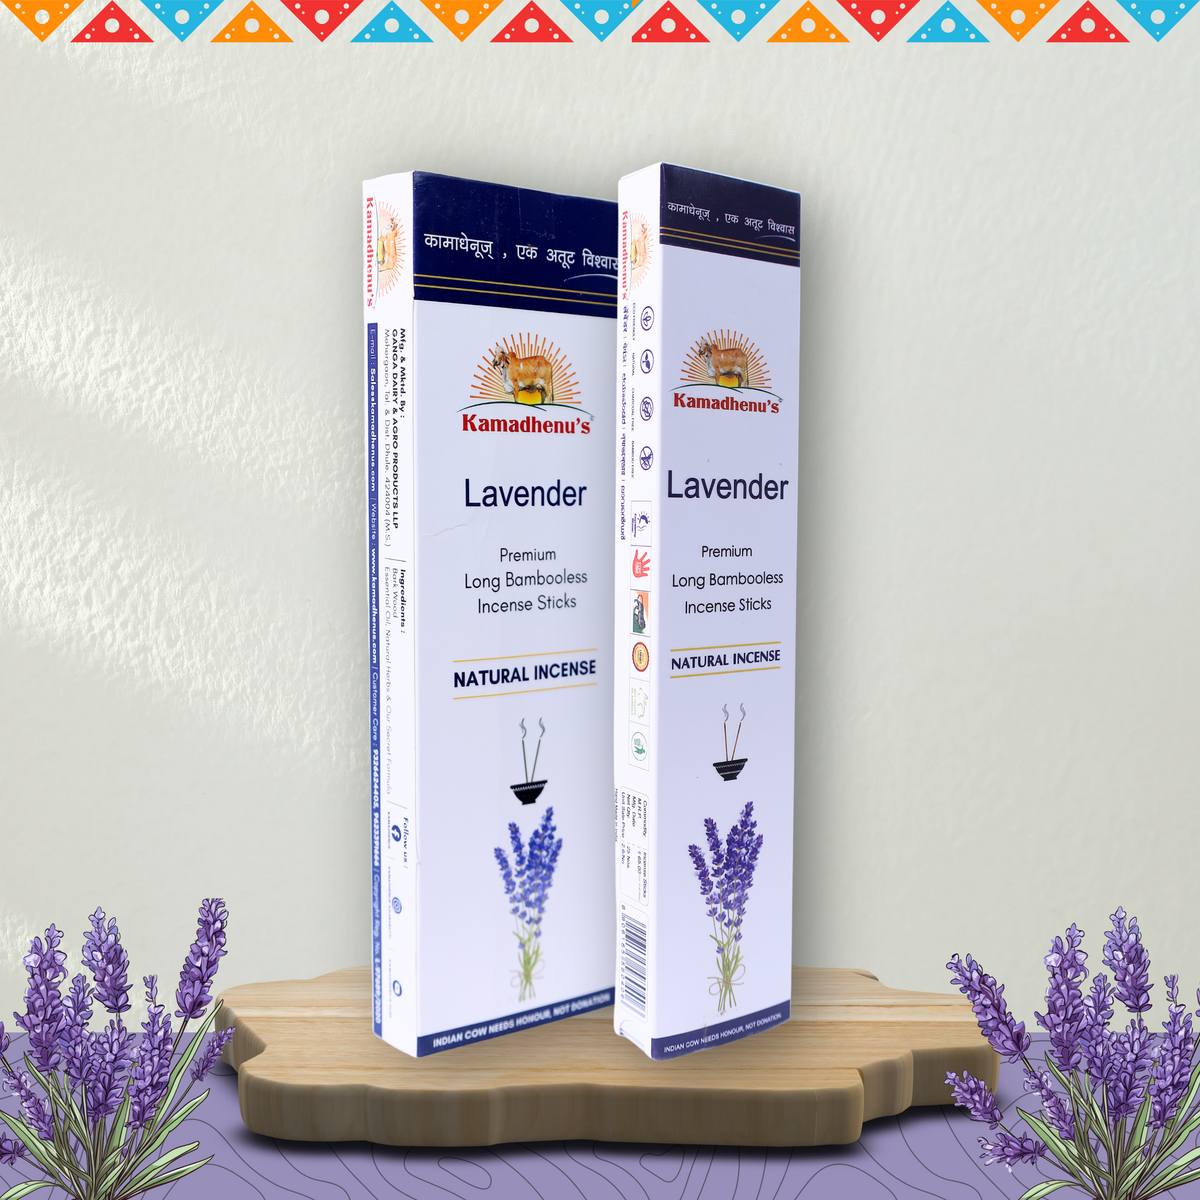 Kamadhenu's Lavender Premium Long Bambooless Incense Sticks